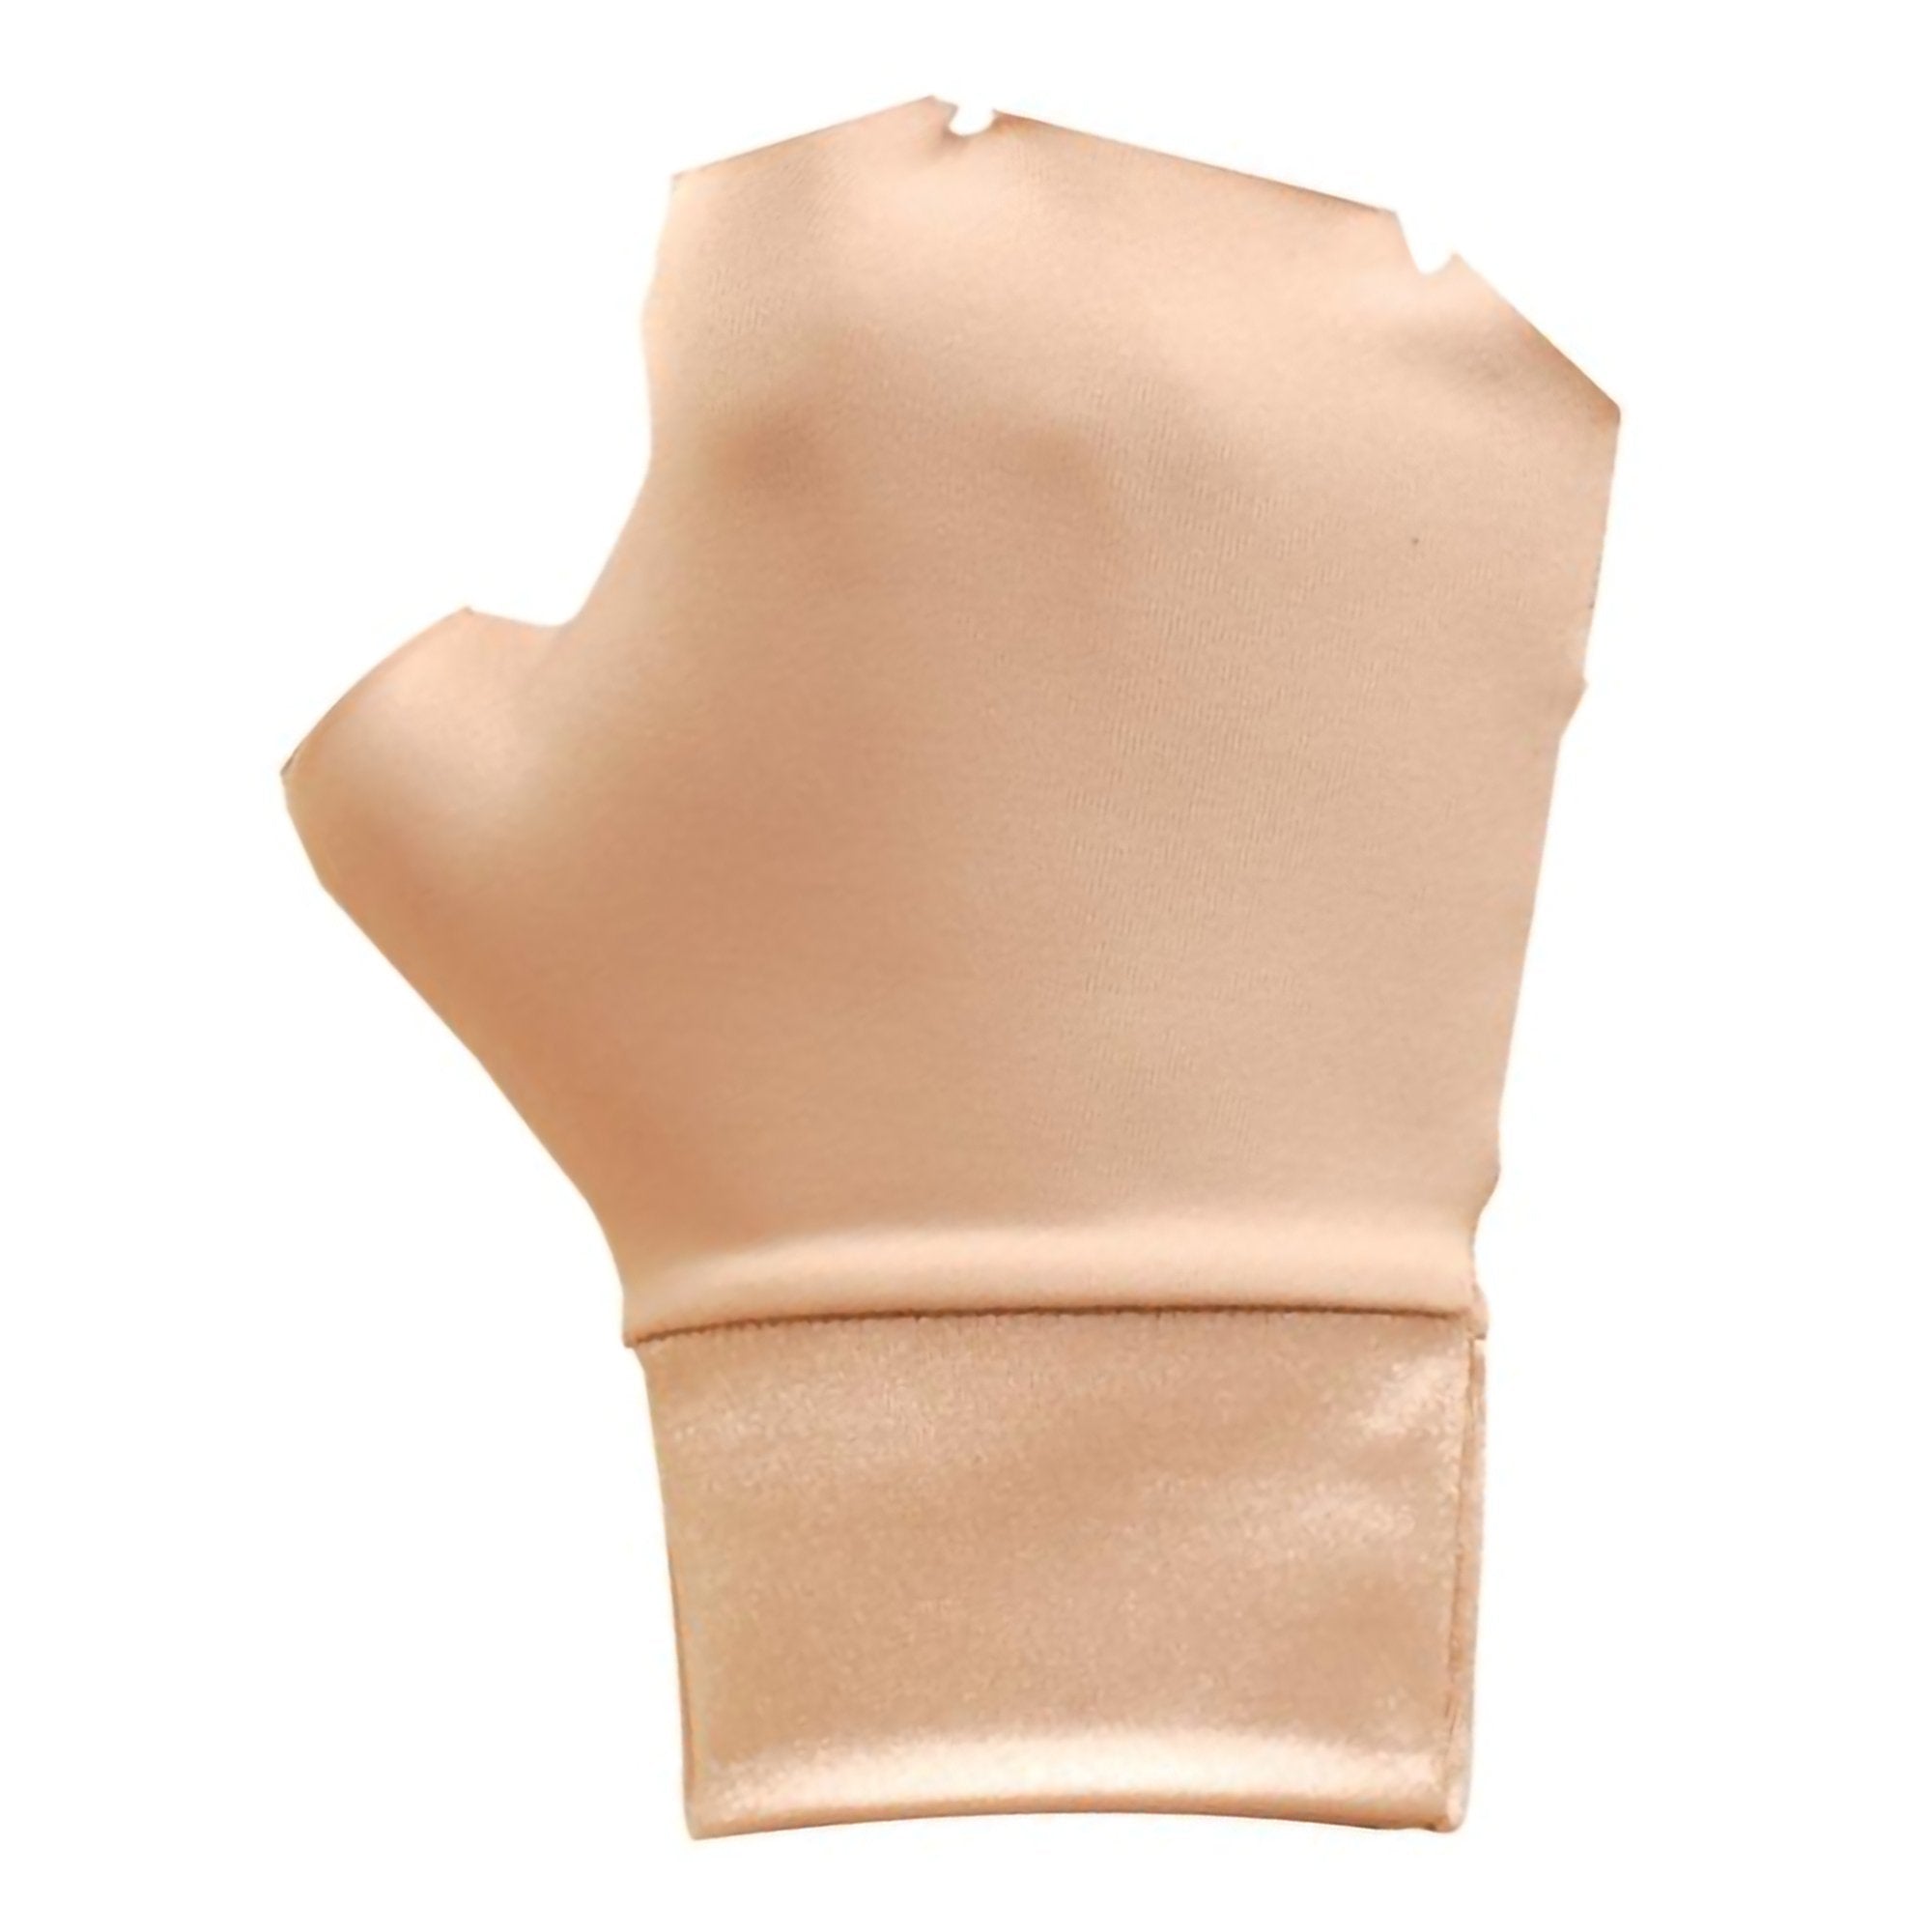 Support Gloves Occumitts® Fingerless Small Wrist Length Ambidextrous Nylon / Spandex